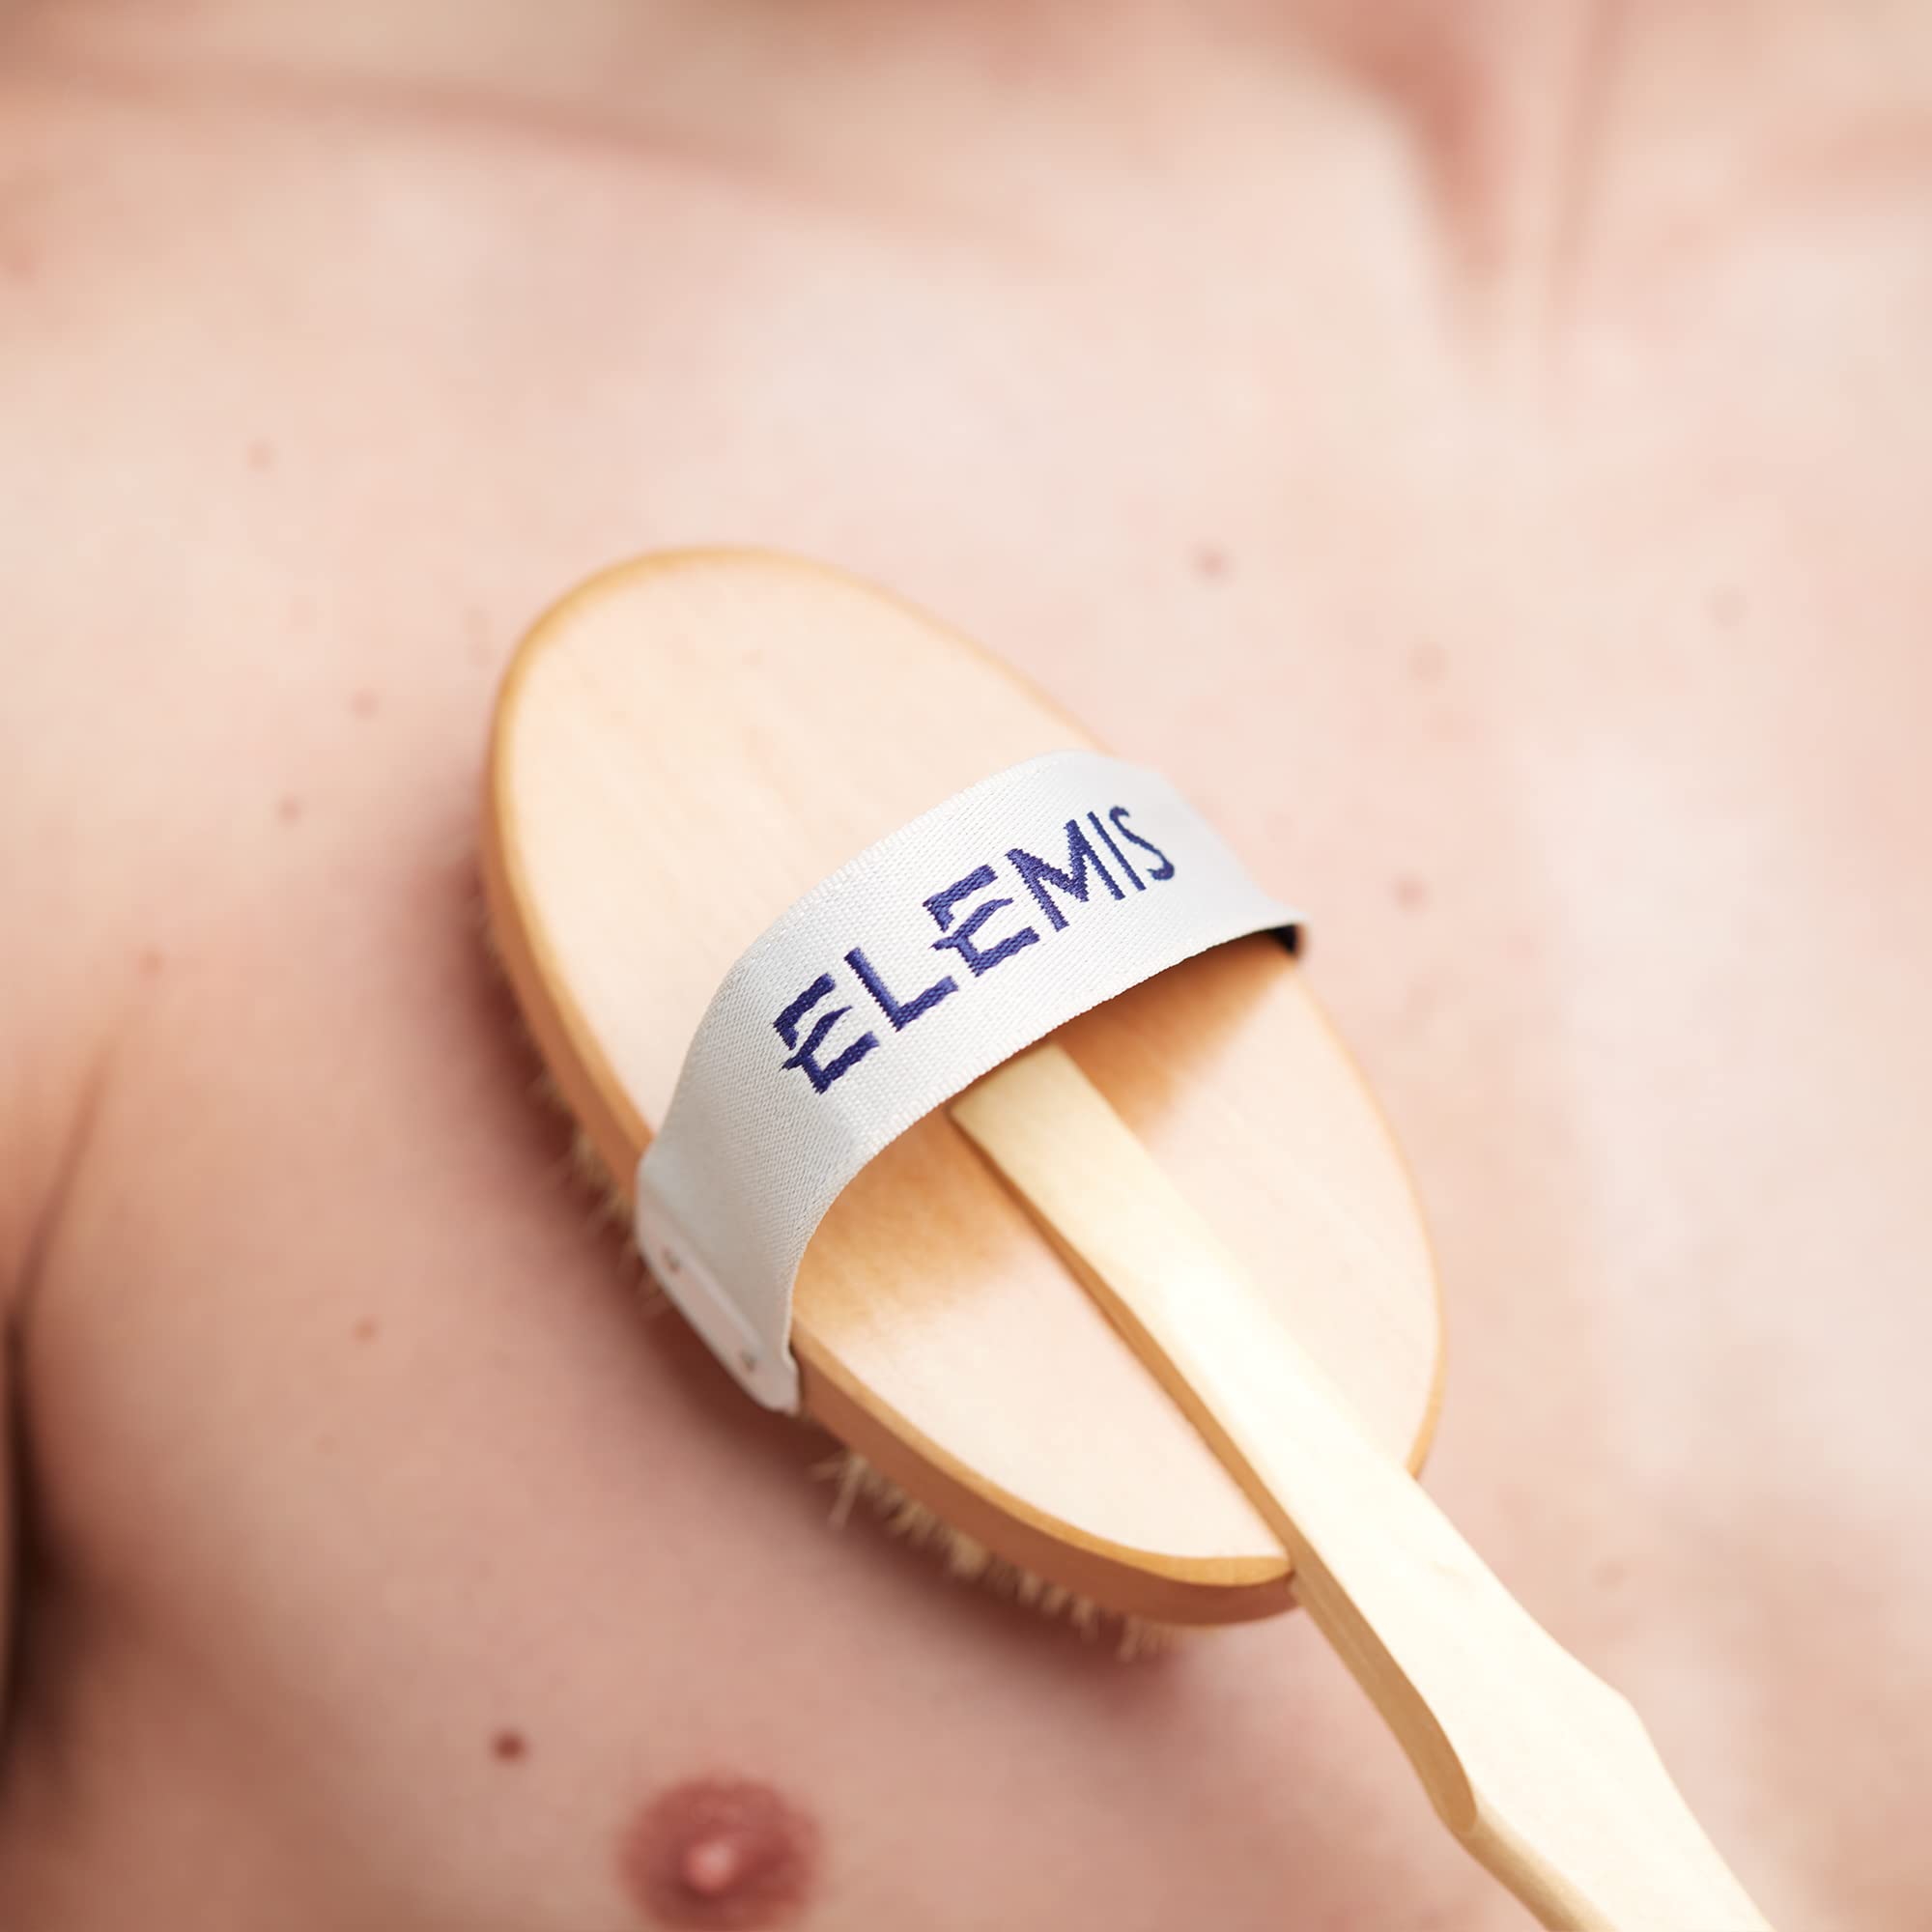 ELEMIS Body Detox Skin Brush - Exfoliating Body Brush, 1 Count (Pack of 1)